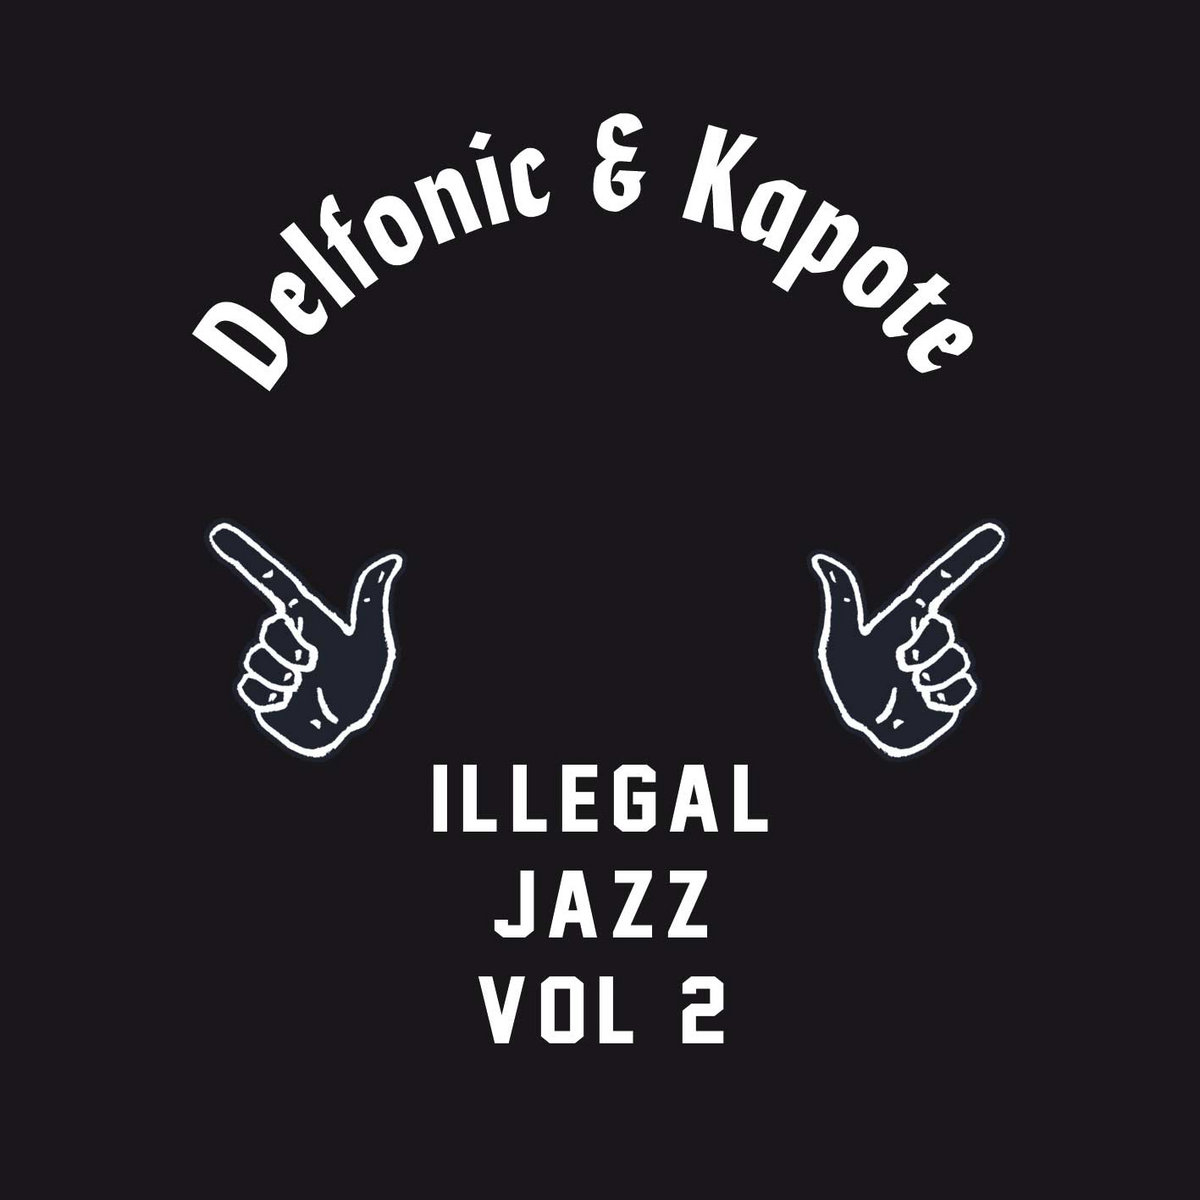 Delfonic & Kapote – Illegal Jazz Vol. 2  [IJR002]